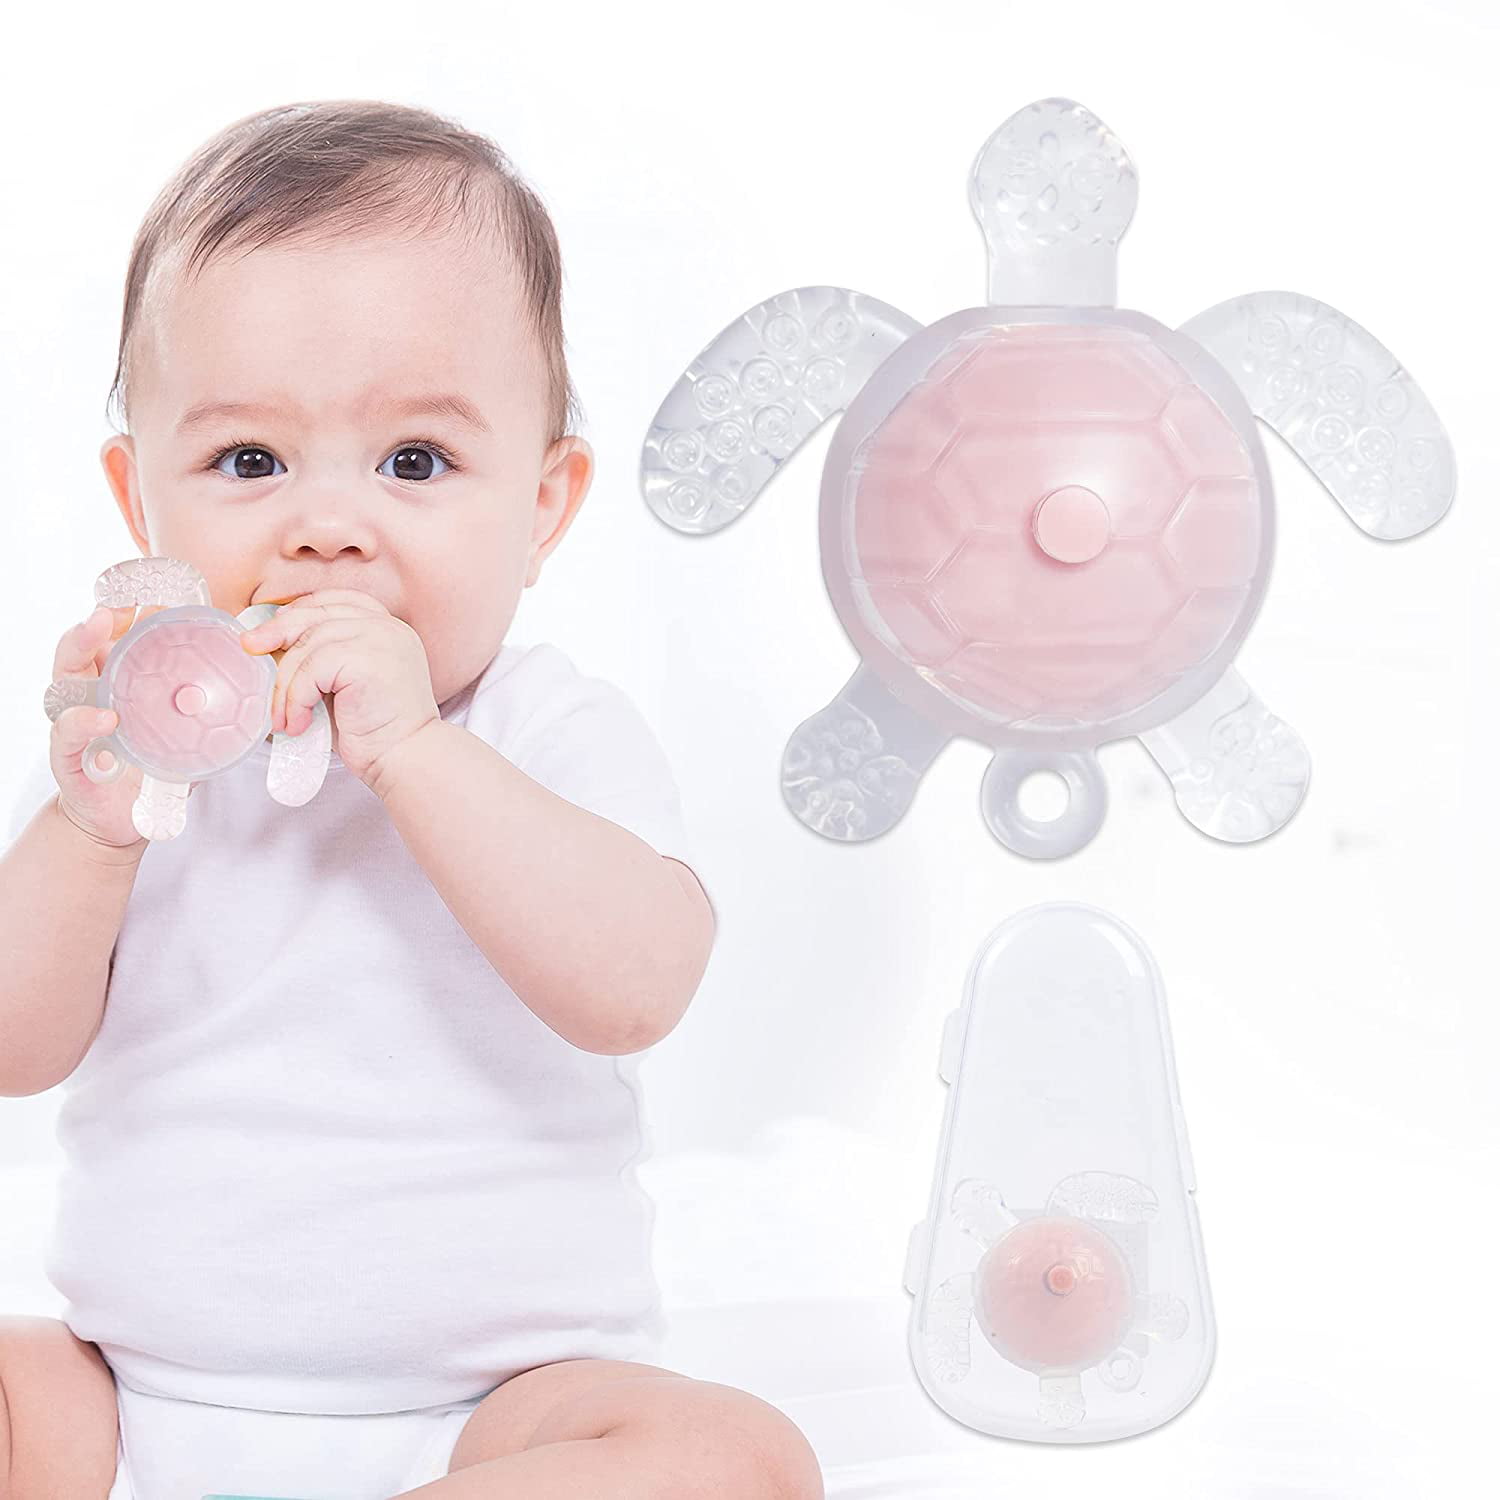 Baby Starfish Teeth silicone Sensory Teether Activity Toy 100% food grade safe 